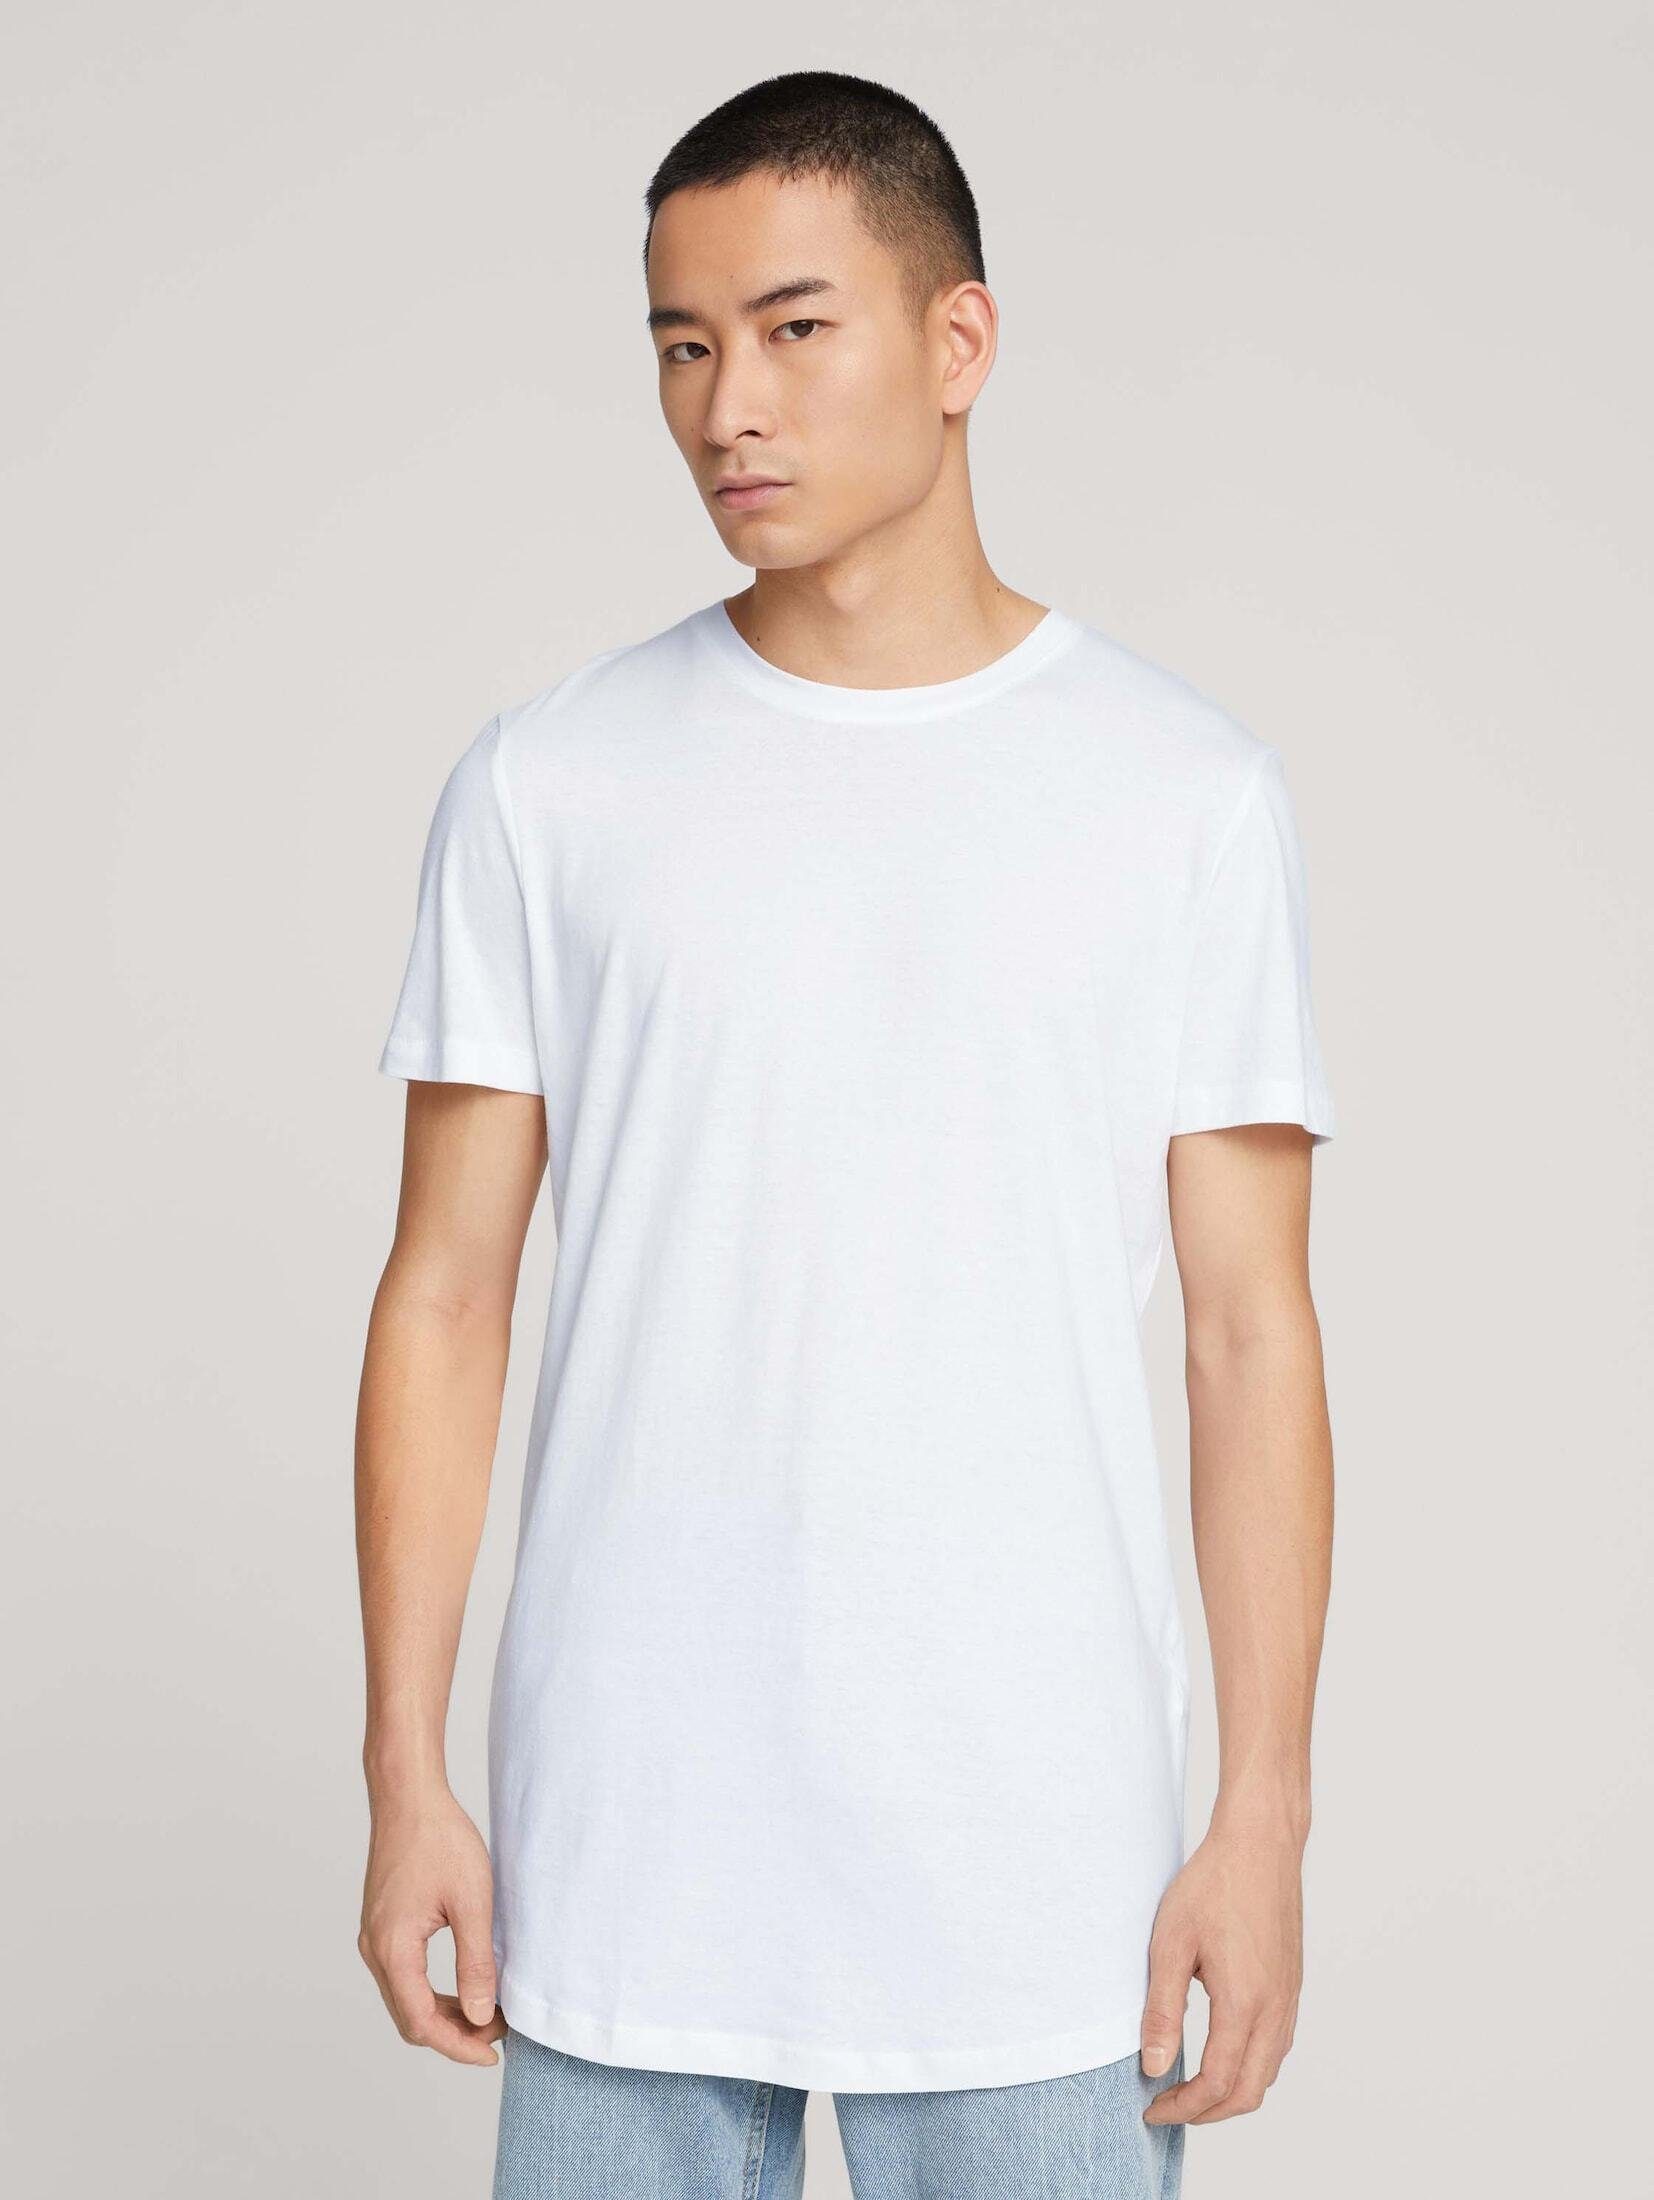 TOM TAILOR Denim T-Shirt T-Shirts im Doppelpack (im Doppelpack) White